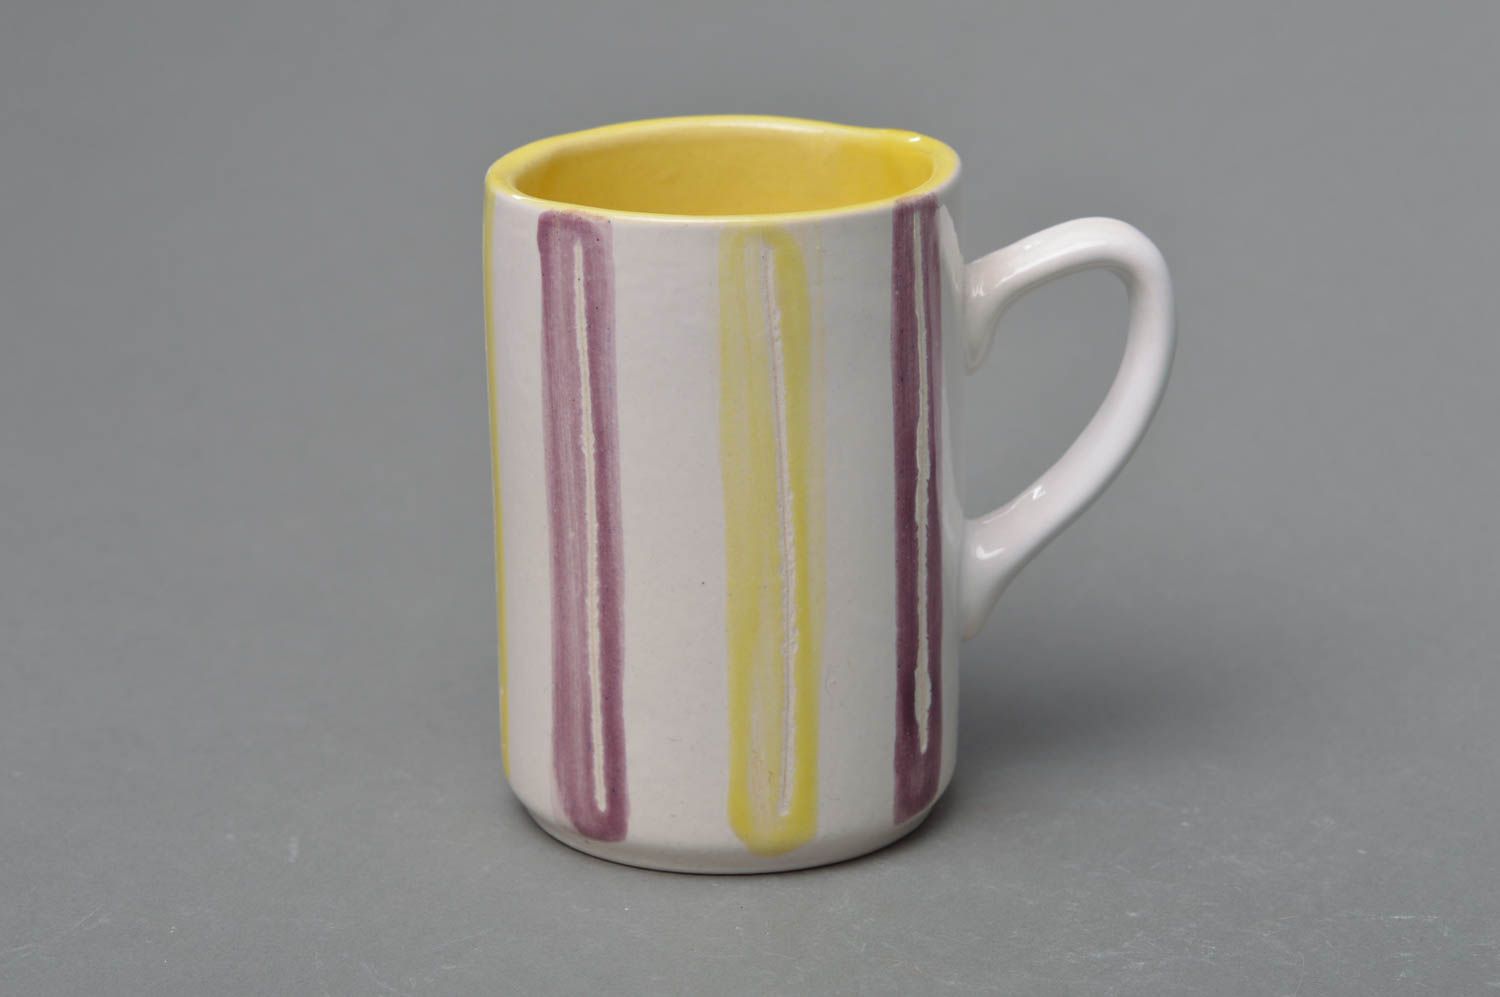 Tasse en porcelaine faite main peinte originale vaisselle pratique cuisine photo 1